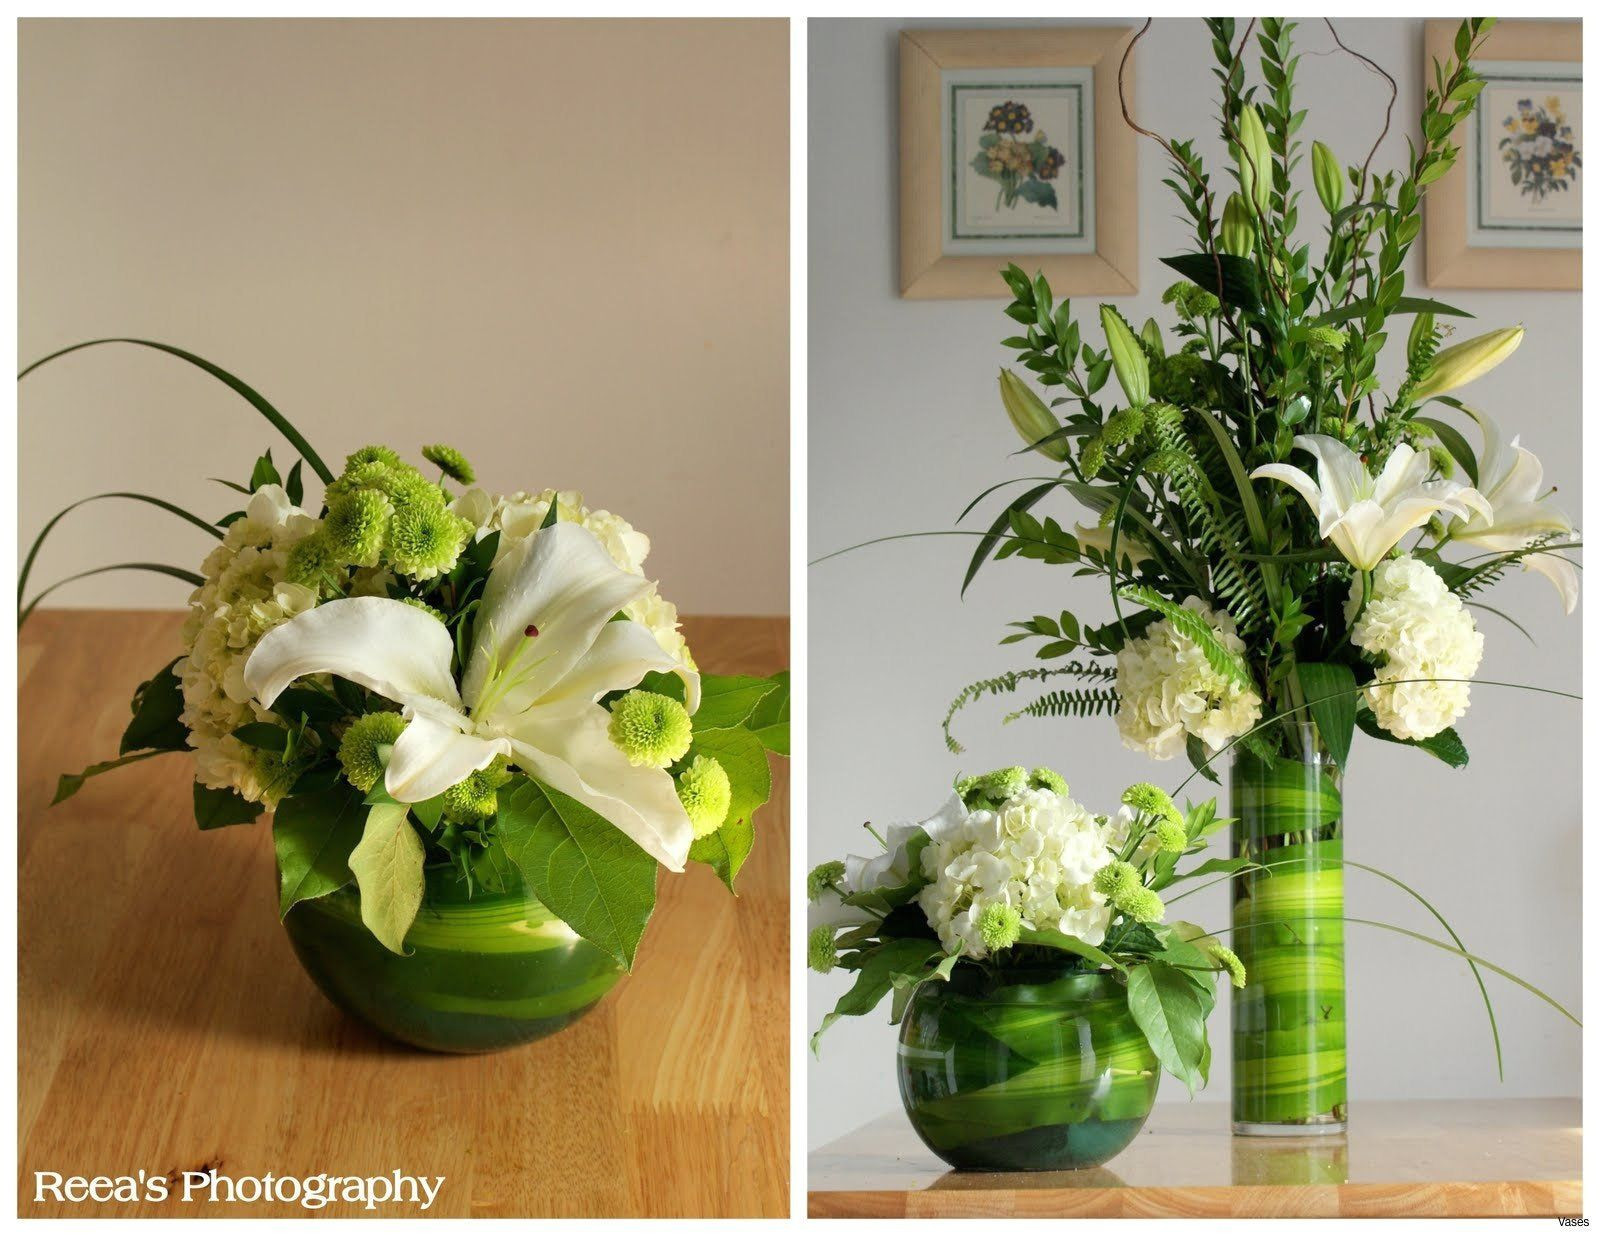 terracotta vase for sale of 21 flower arrangement in vase the weekly world intended for 21 flower arrangement in vase